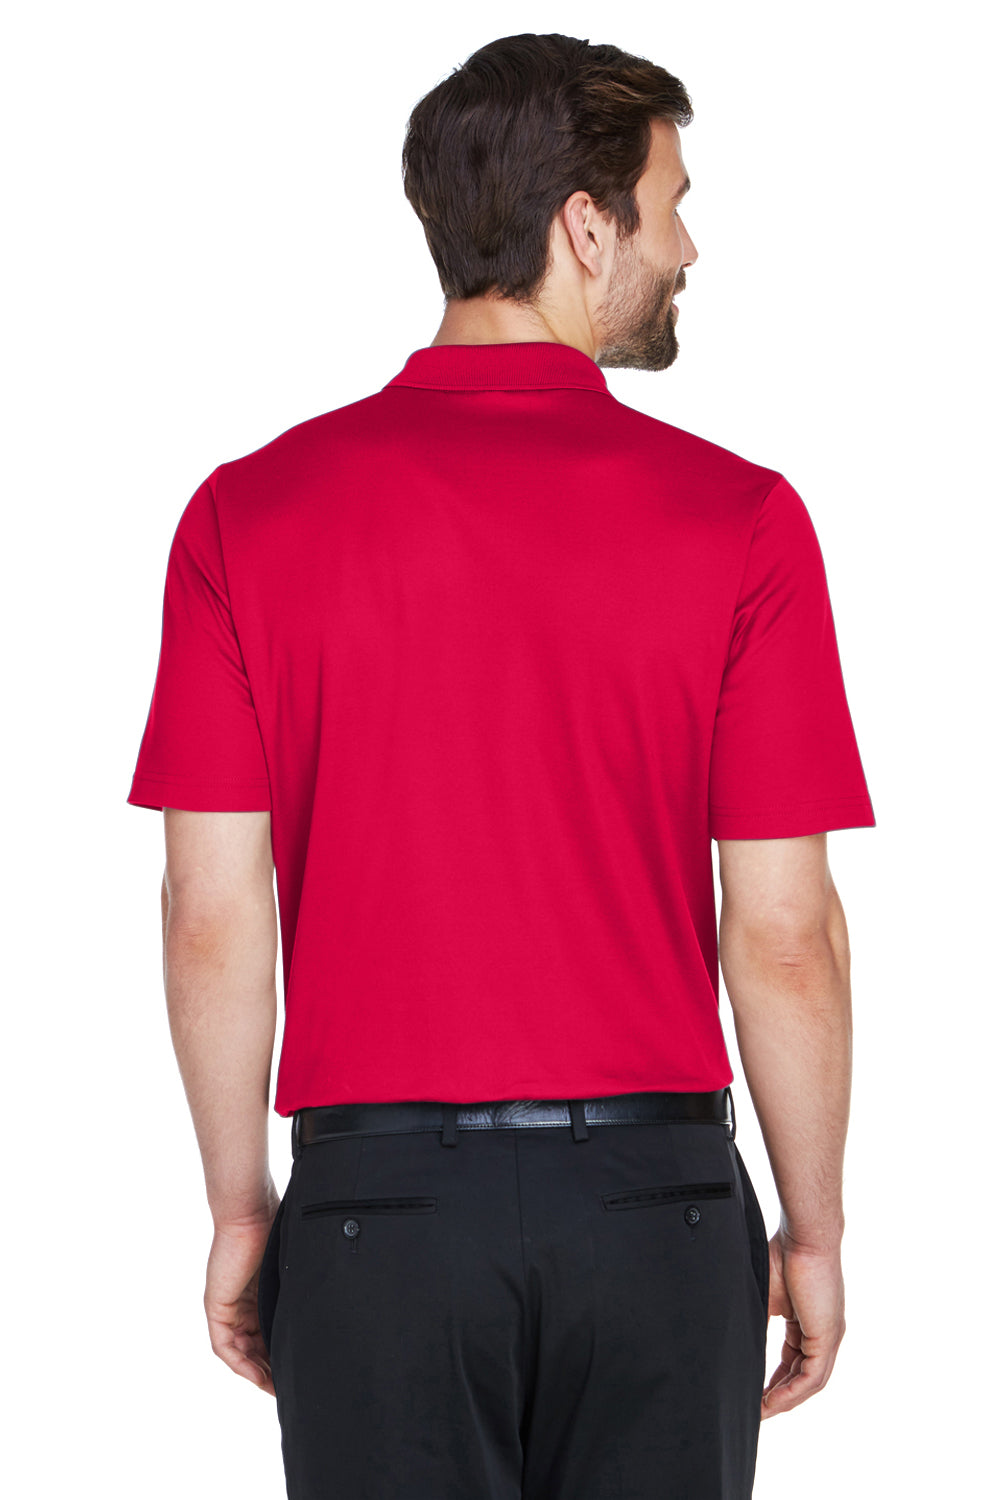 Devon & Jones DG20 Mens CrownLux Performance Moisture Wicking Short Sleeve Polo Shirt Red Back